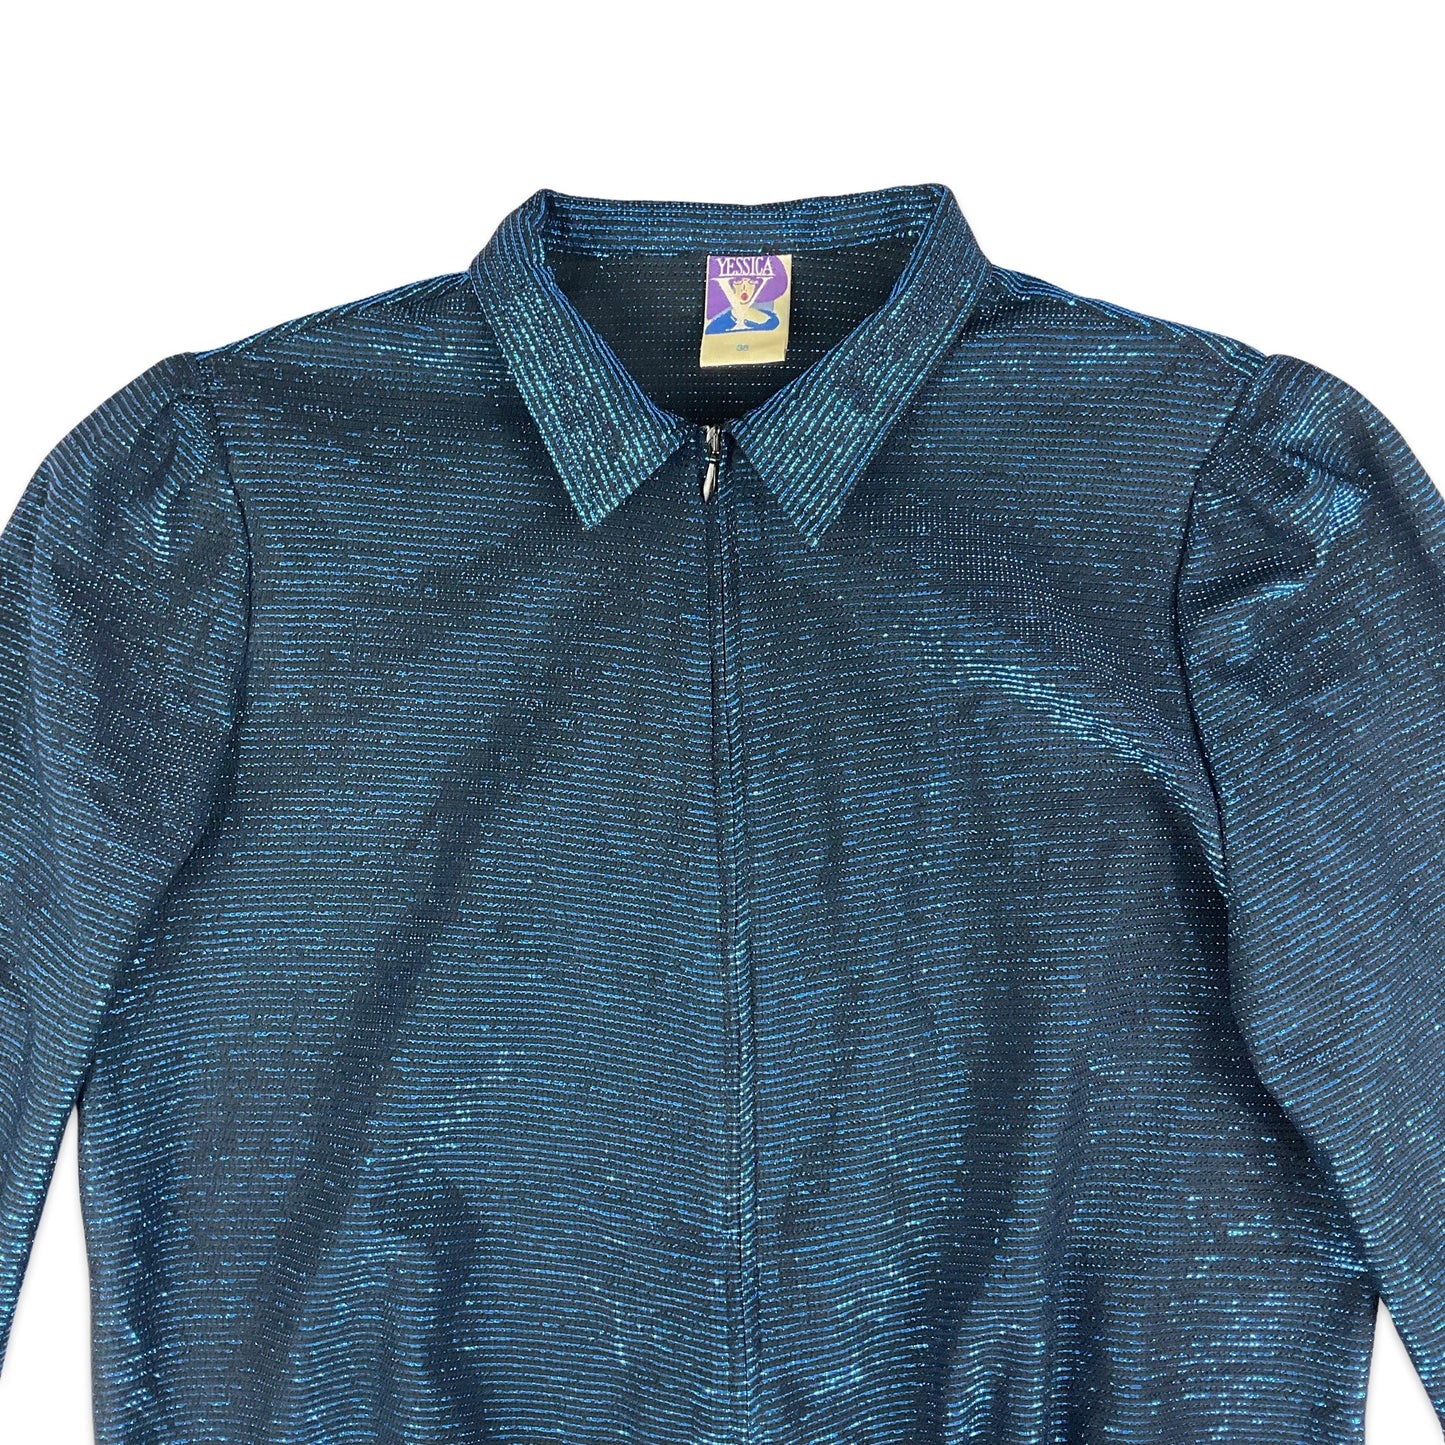 80s Black & Blue Sparkly Zip Up Jacket